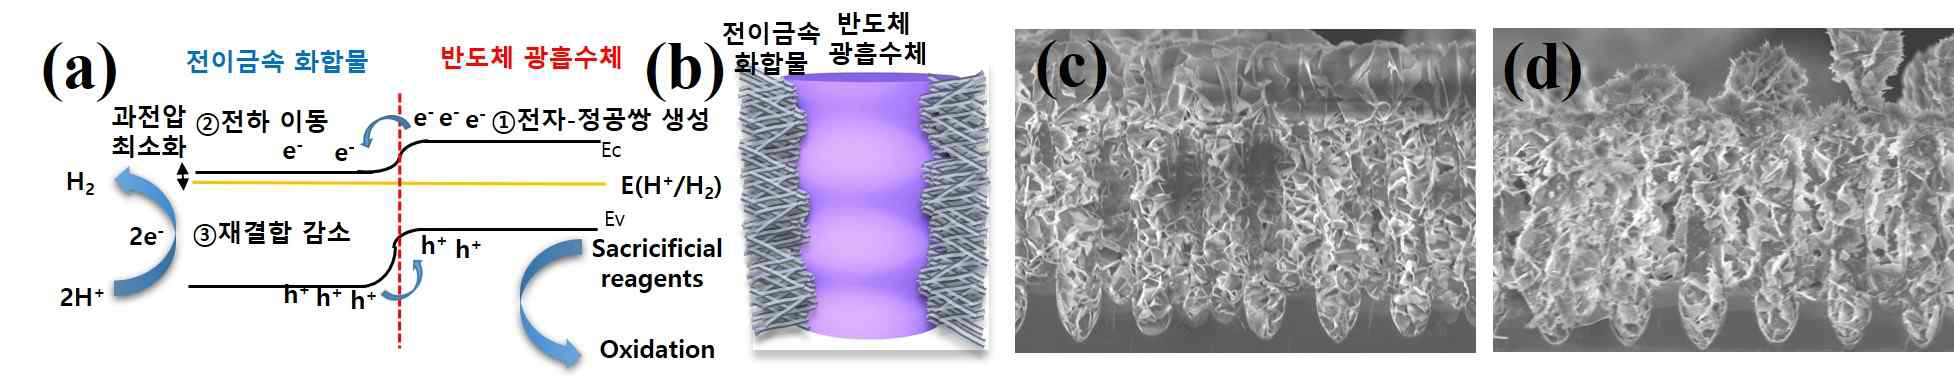 (a,b) 광흡수체/전이금속화합물이종접합밴드다이어그램및모식도. (c) 실리콘광흡수체/NiCo LDH nanosheet 이종접합 구조(d) 실리콘 광흡수체/NiCo LDH nanosheet-nanowire 이종접합단면SEM 이미지